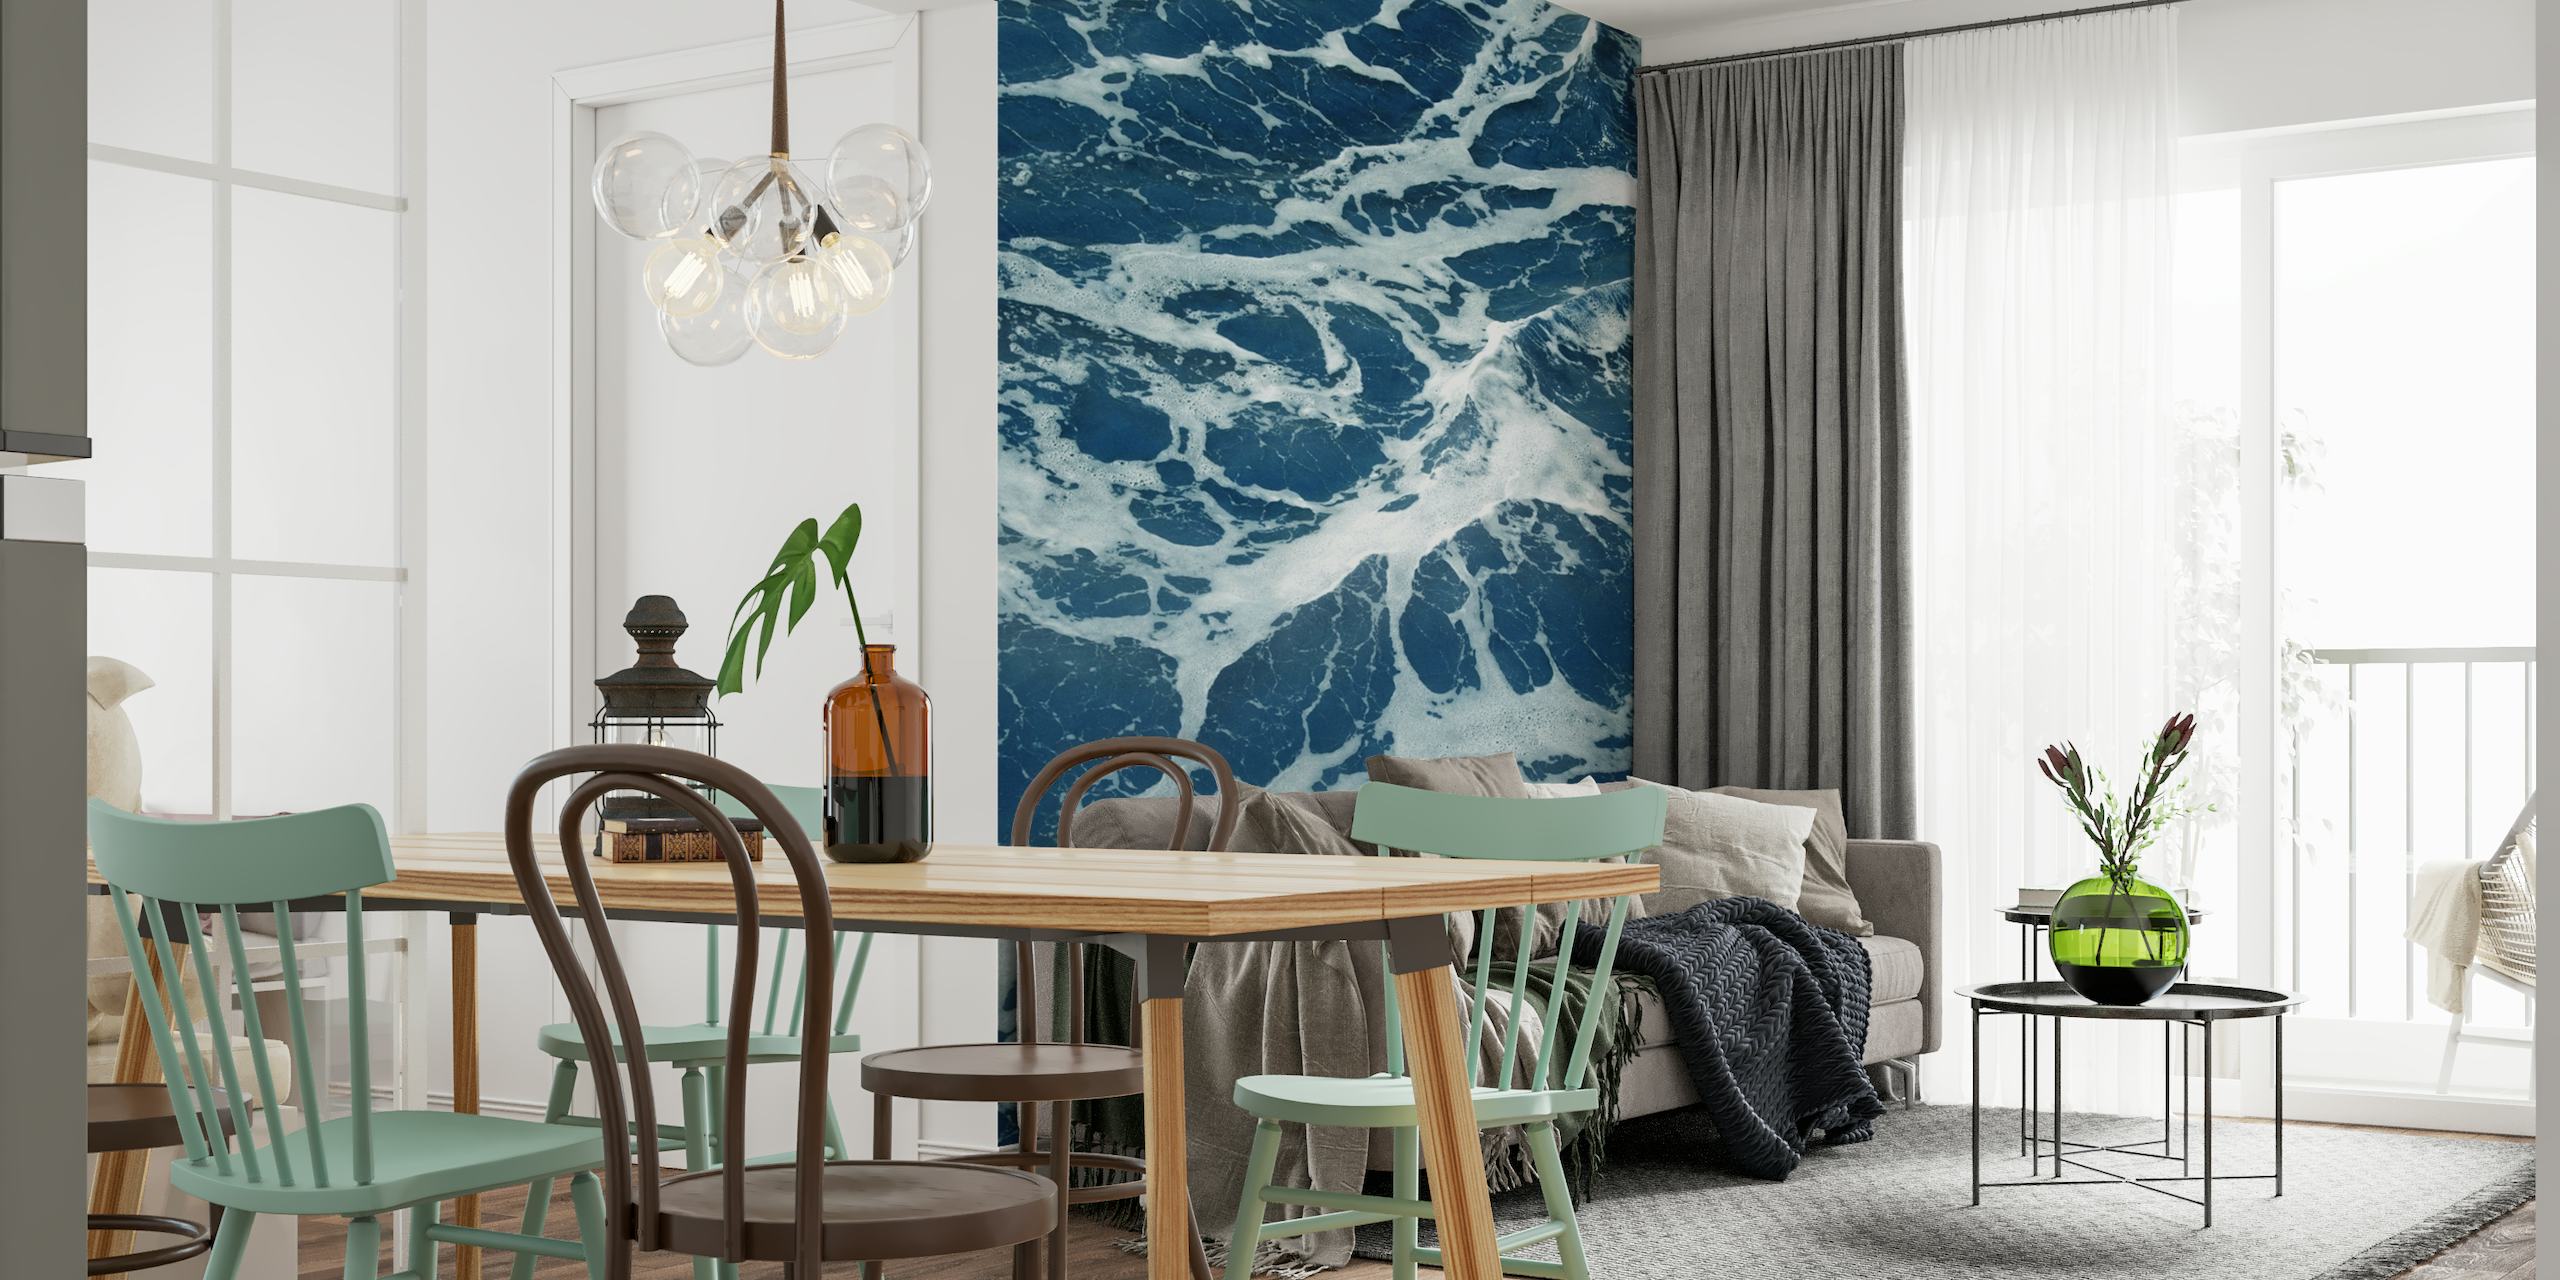 Atlantic ocean waves mural wallpaper with frothy white seafoam on deep blue water.